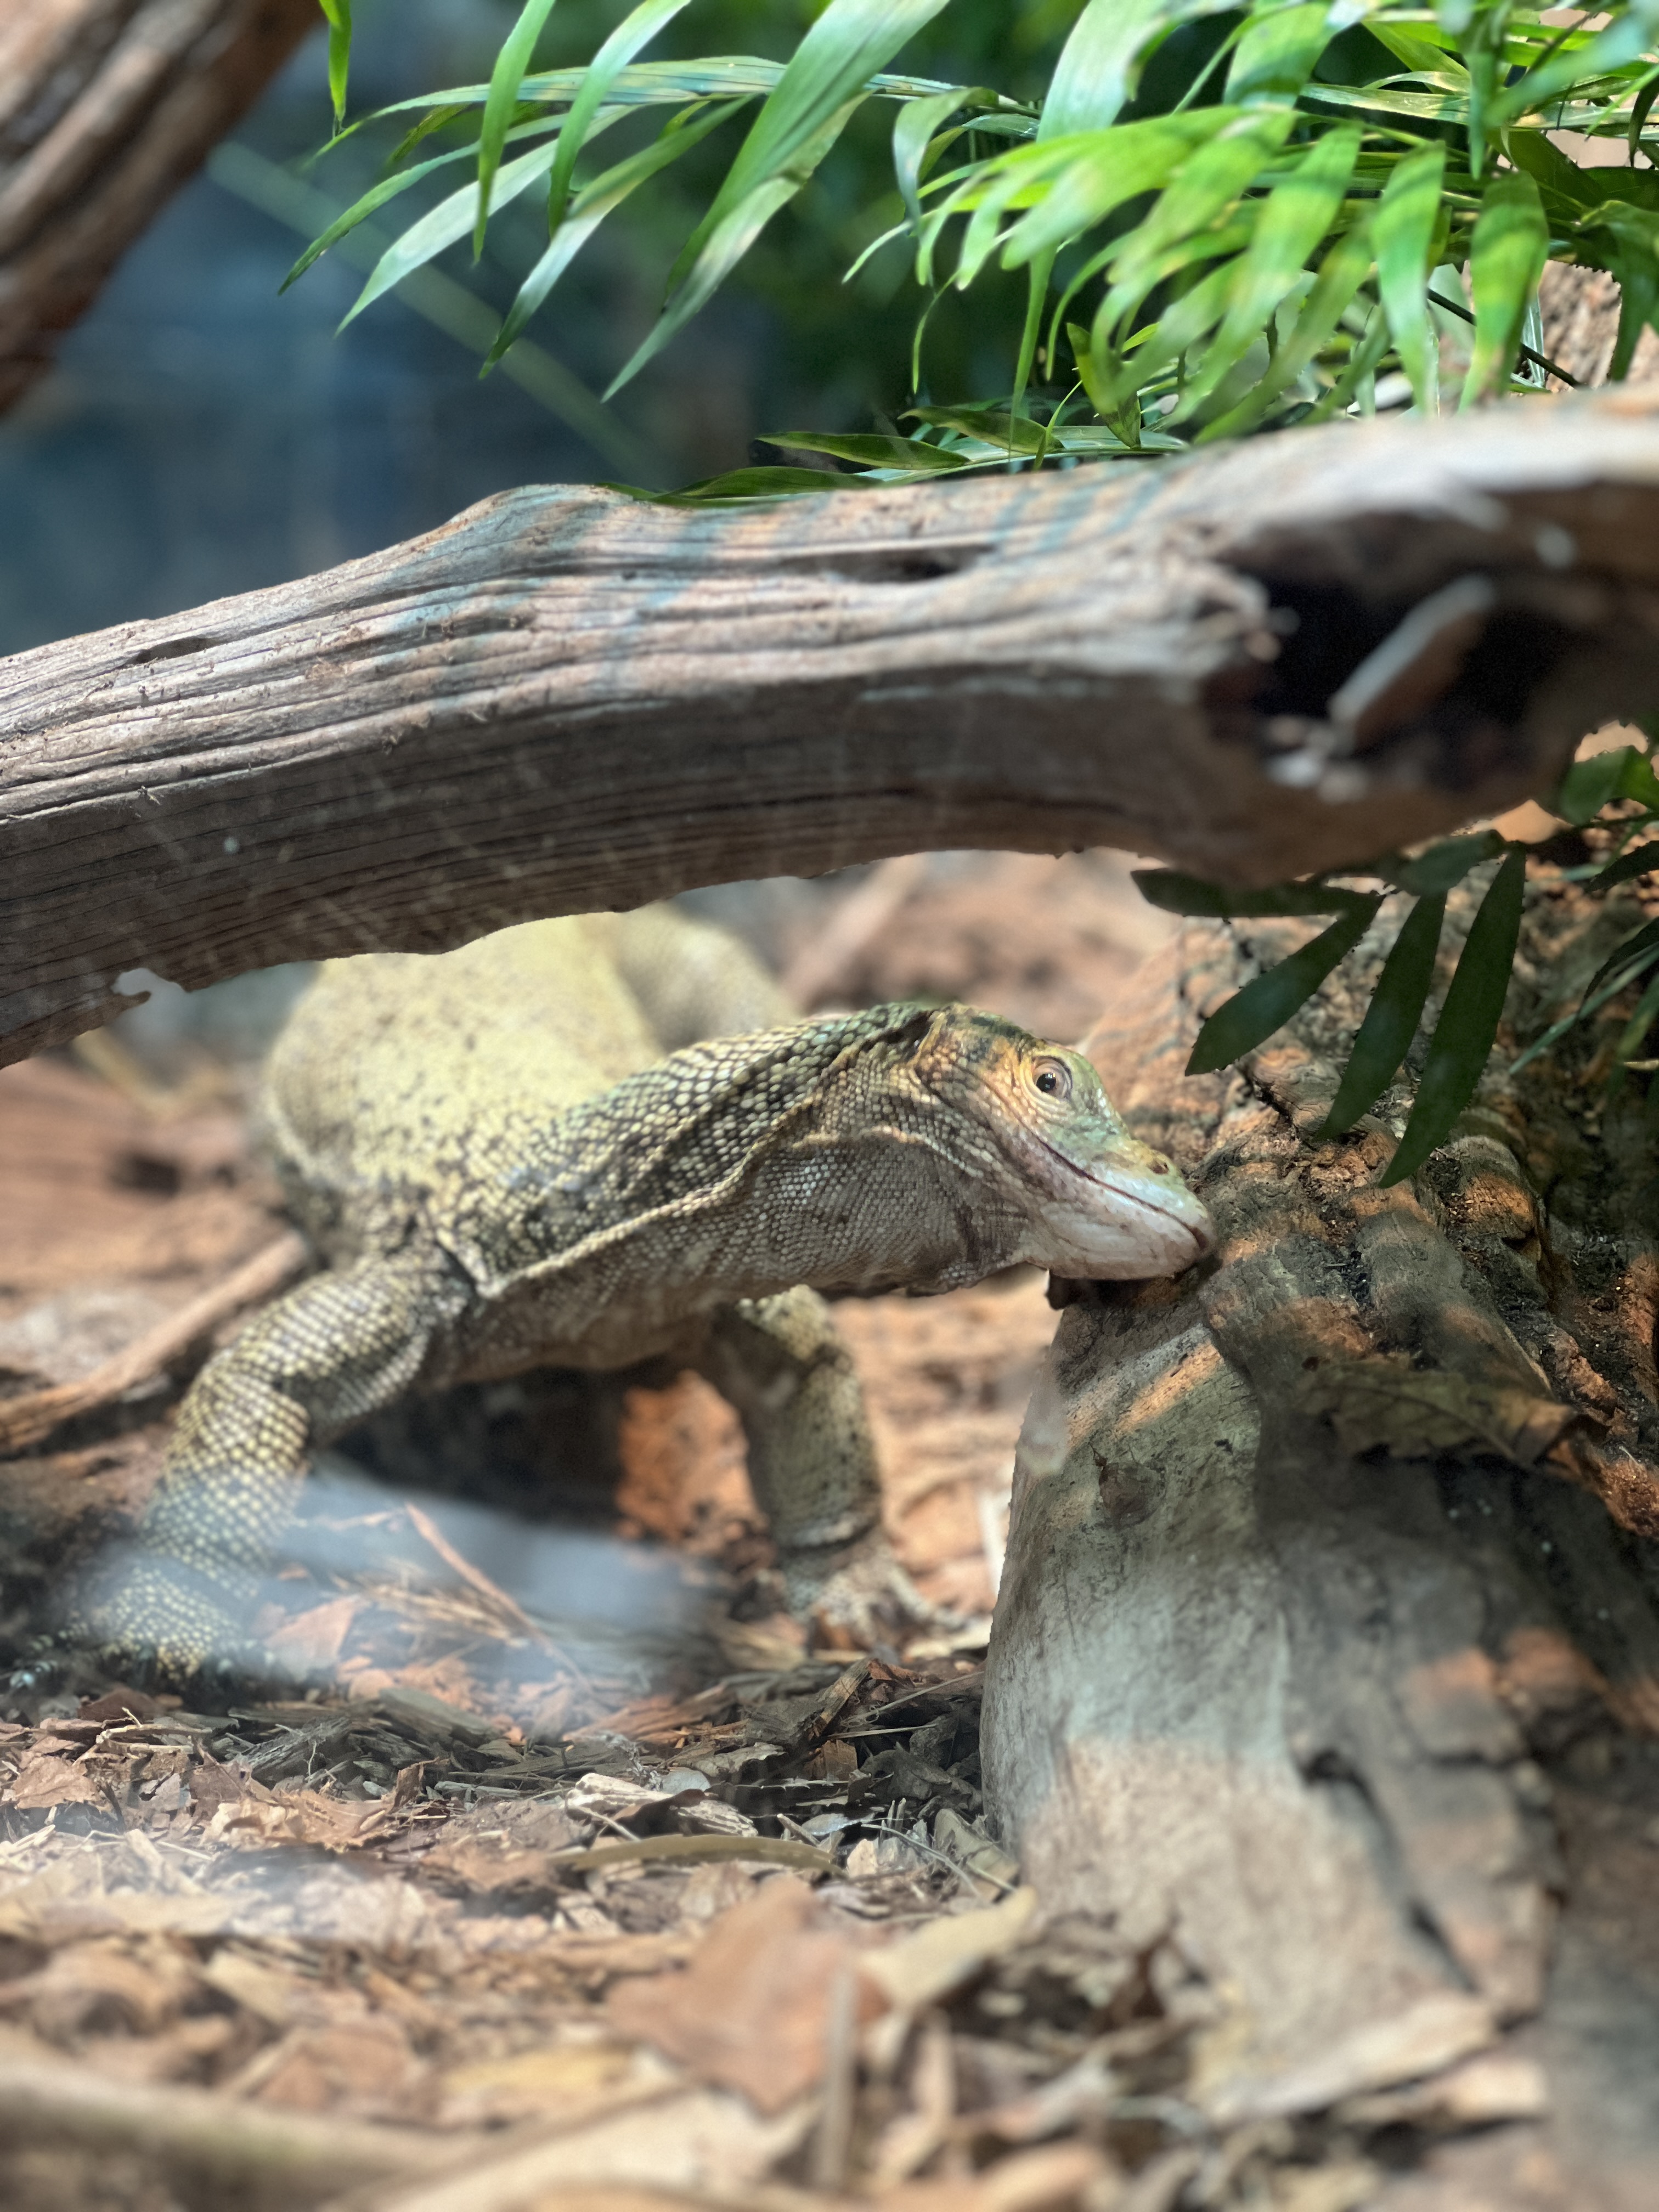 A giant lizard at the Cincinnati Zoo.